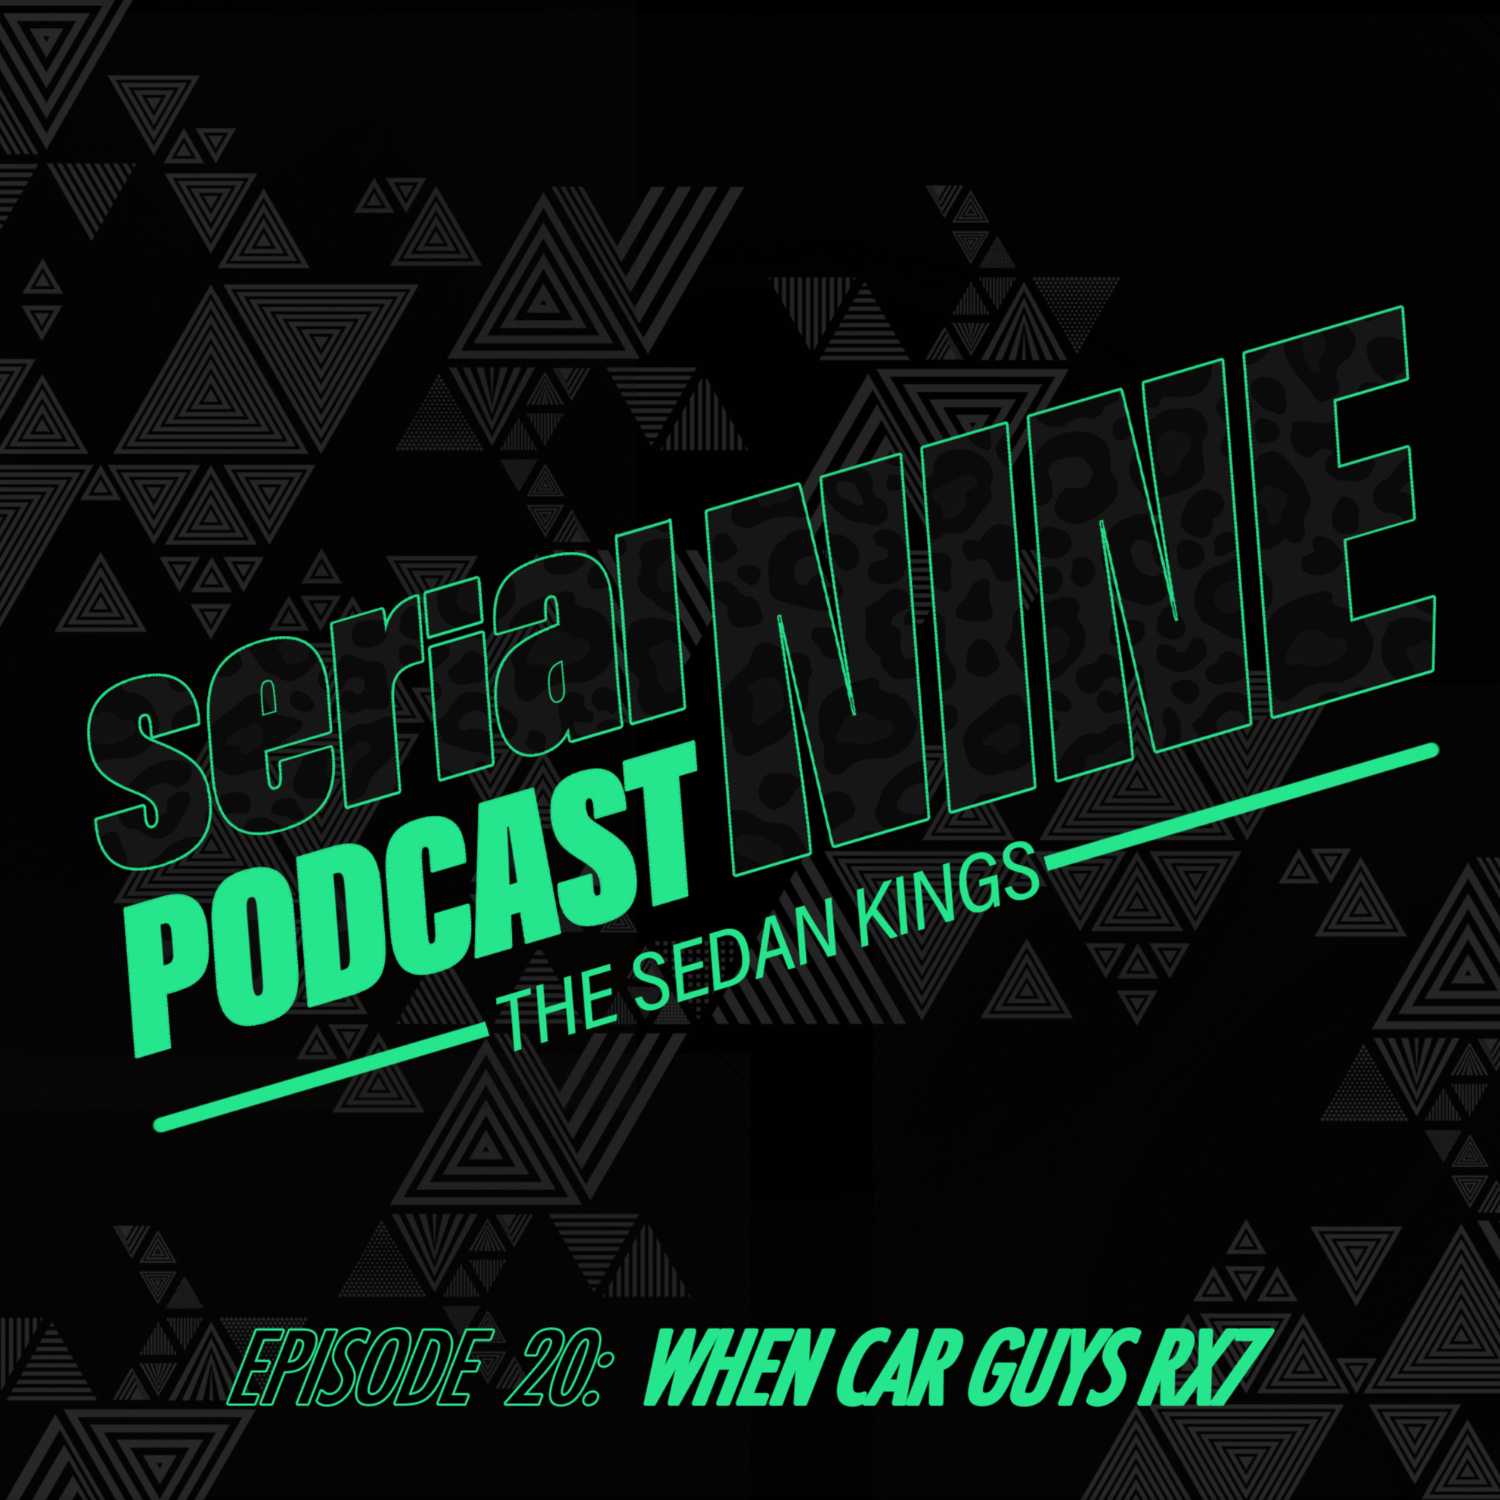 SerialPodcastNine Episode 20 When Car Guys RX7